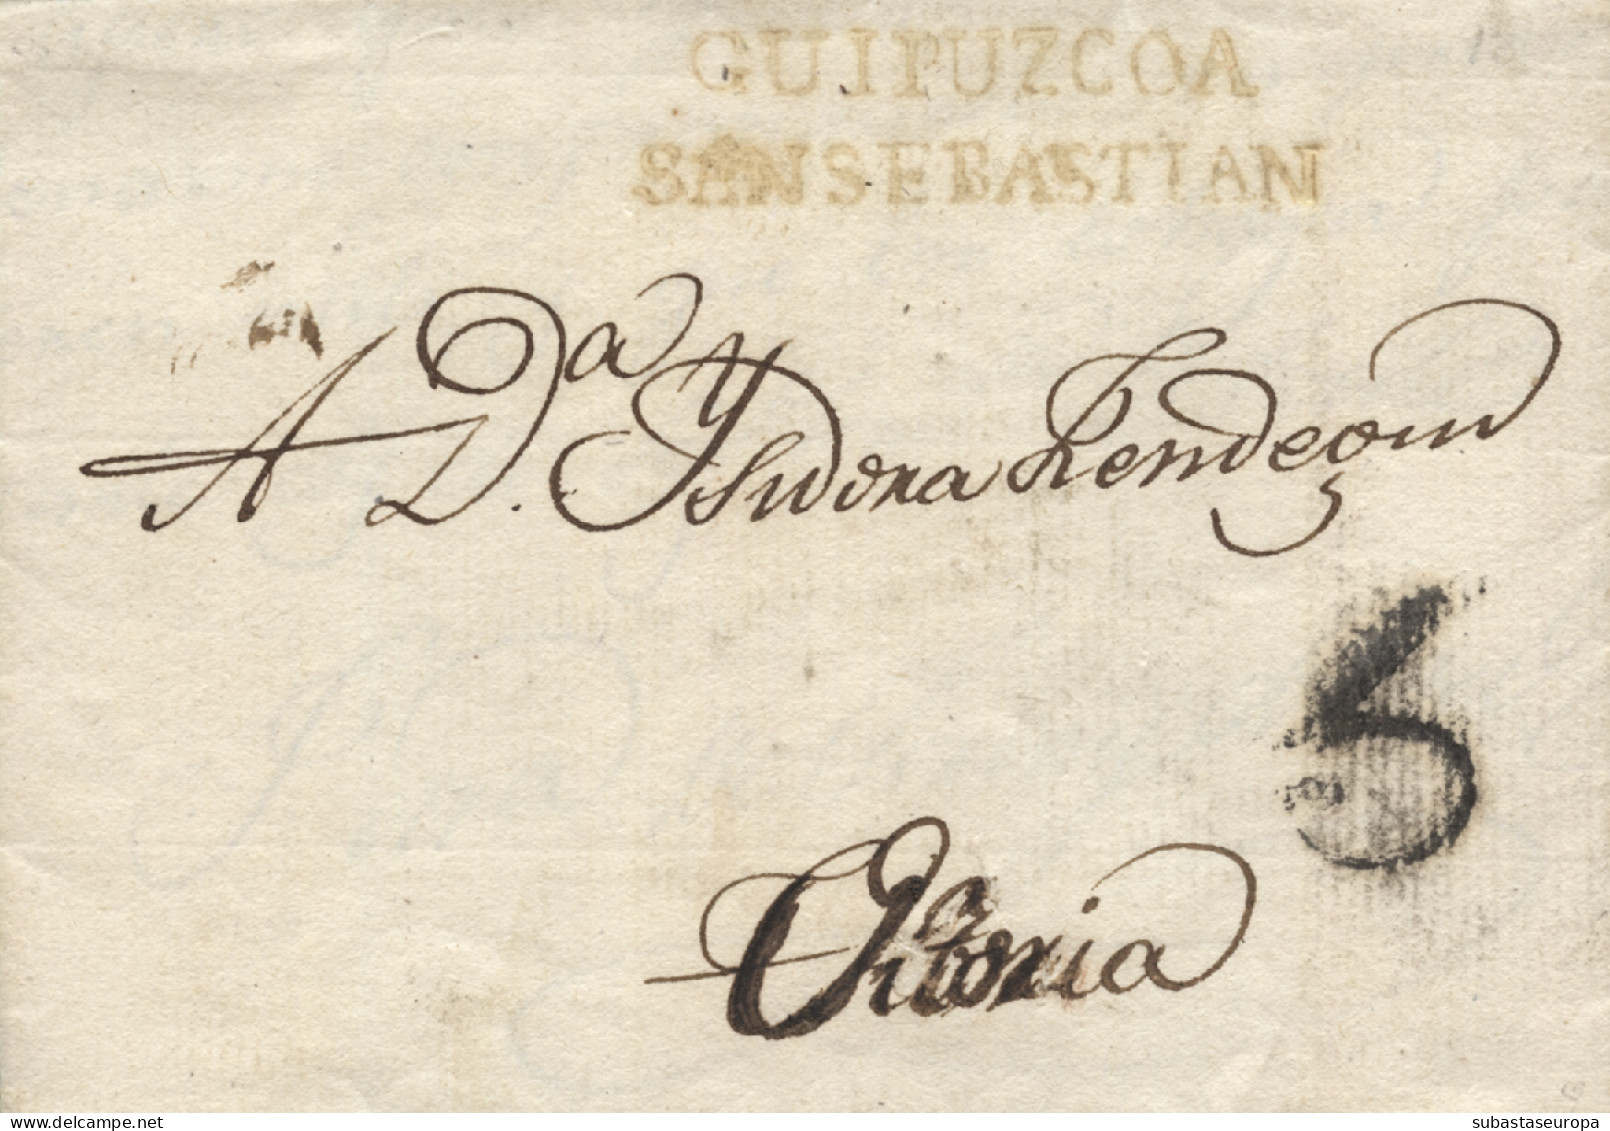 D.P. 11. 1812 (6 ABR). Carta De San Sebastián A Vitoria. Marca Nº 20R. Porteo 6. Preciosa. - ...-1850 Préphilatélie